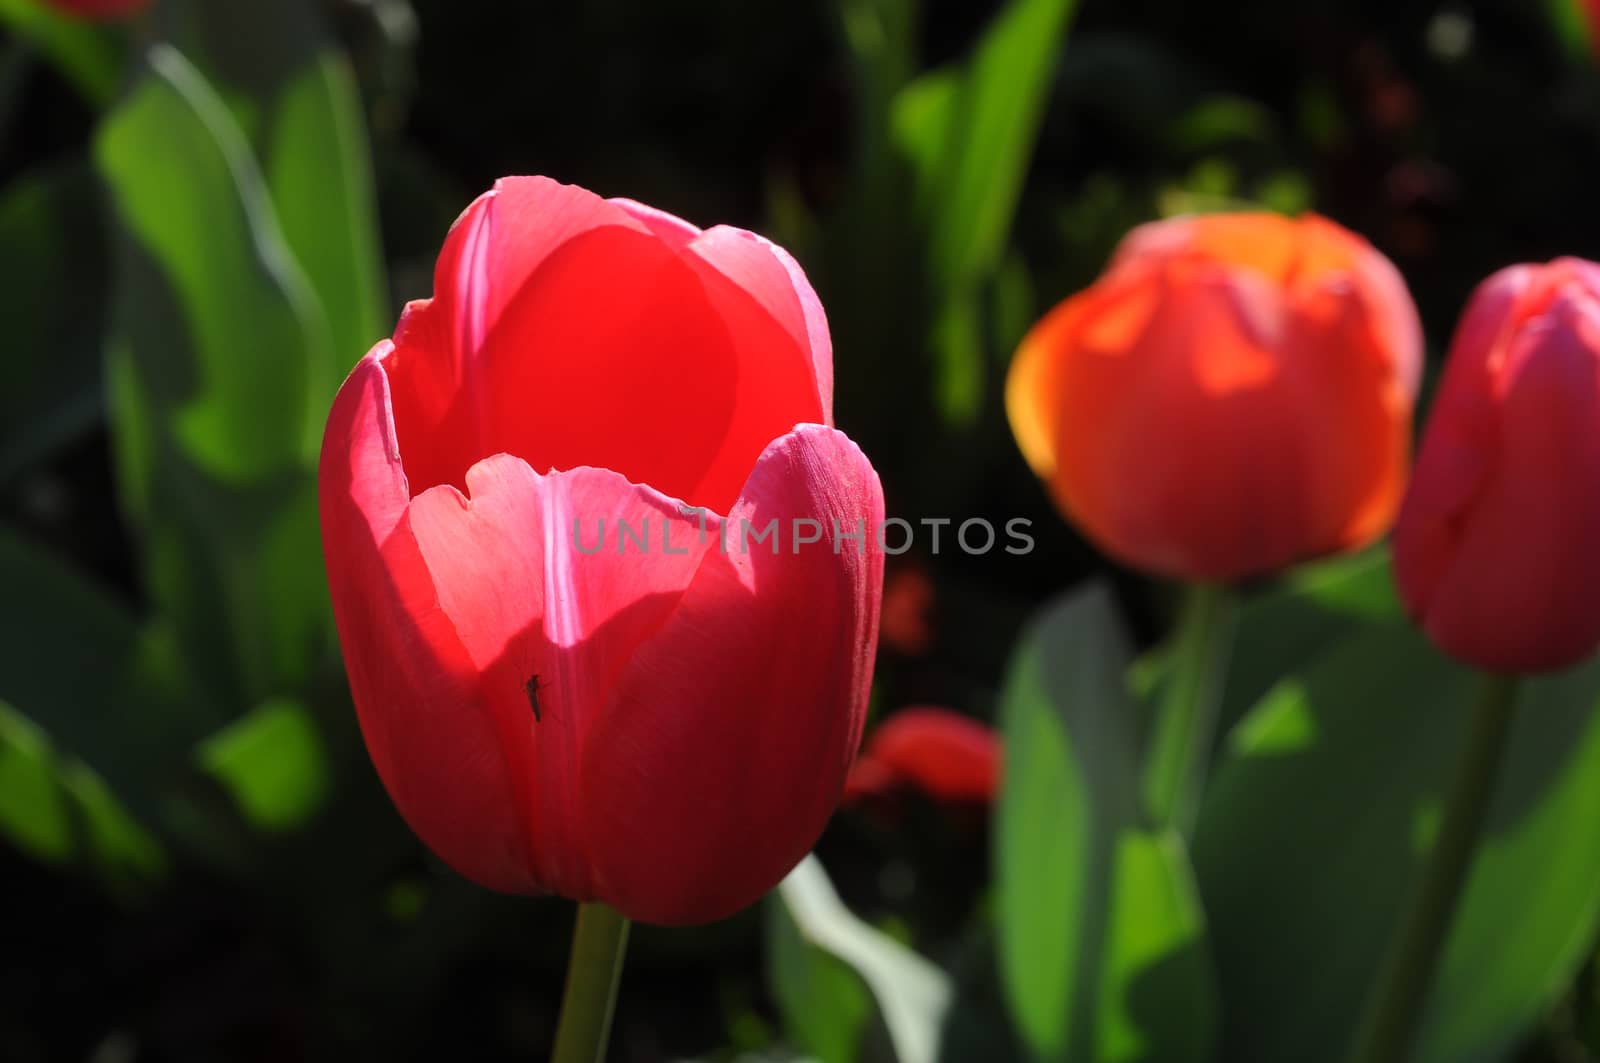 Red tulip in bright summer light by eyeofpaul